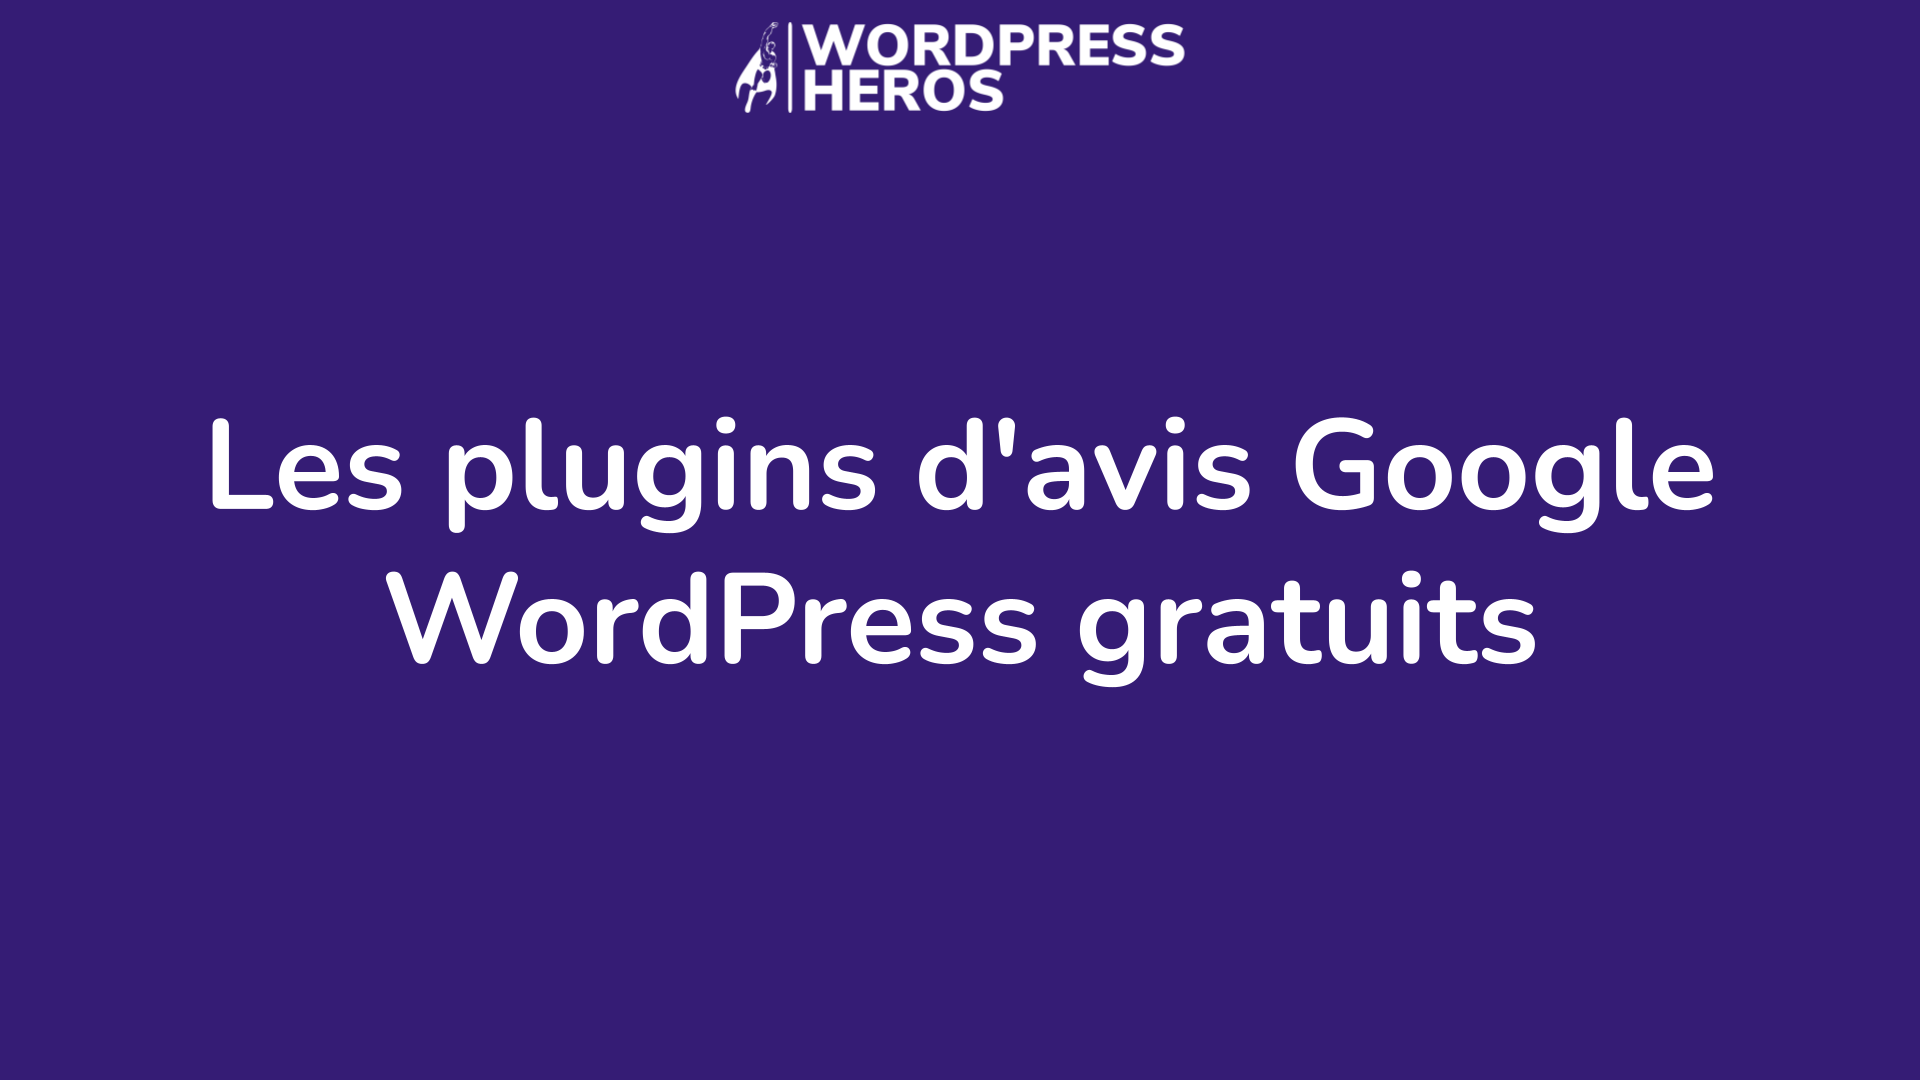 Les plugins d'avis Google WordPress gratuits